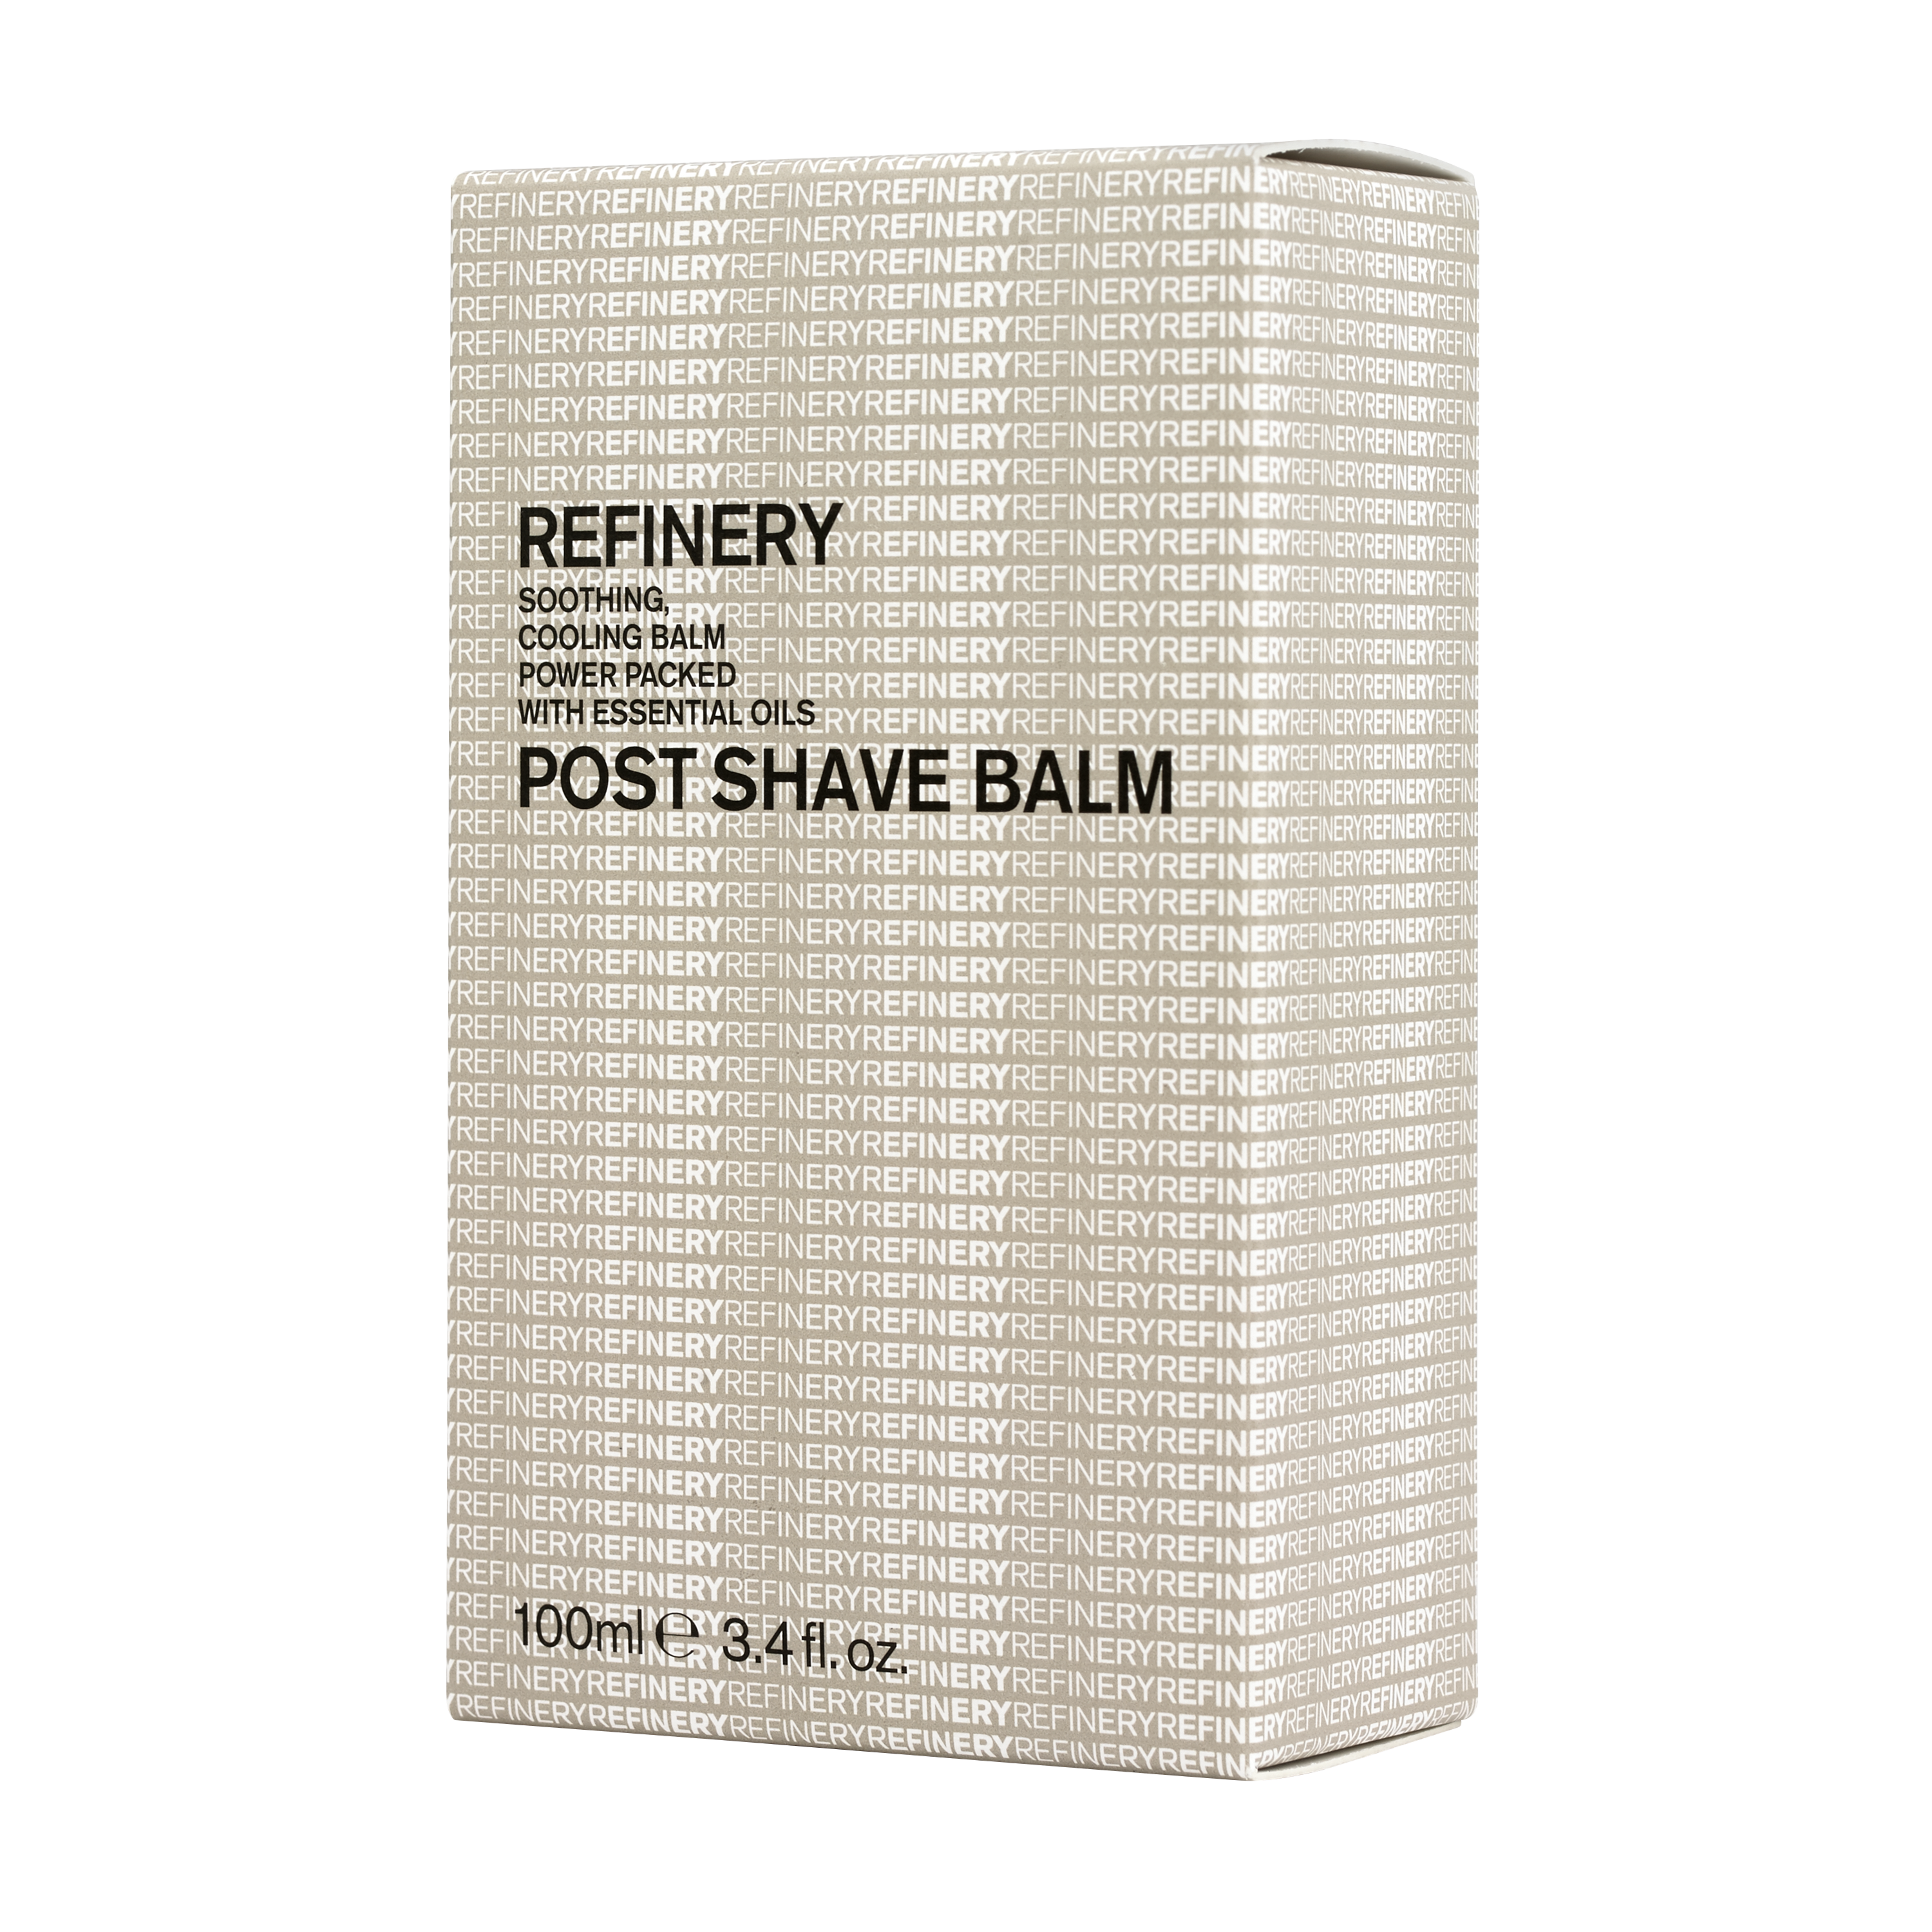 Refinery Post Shave Balm Aromatherapy Associates